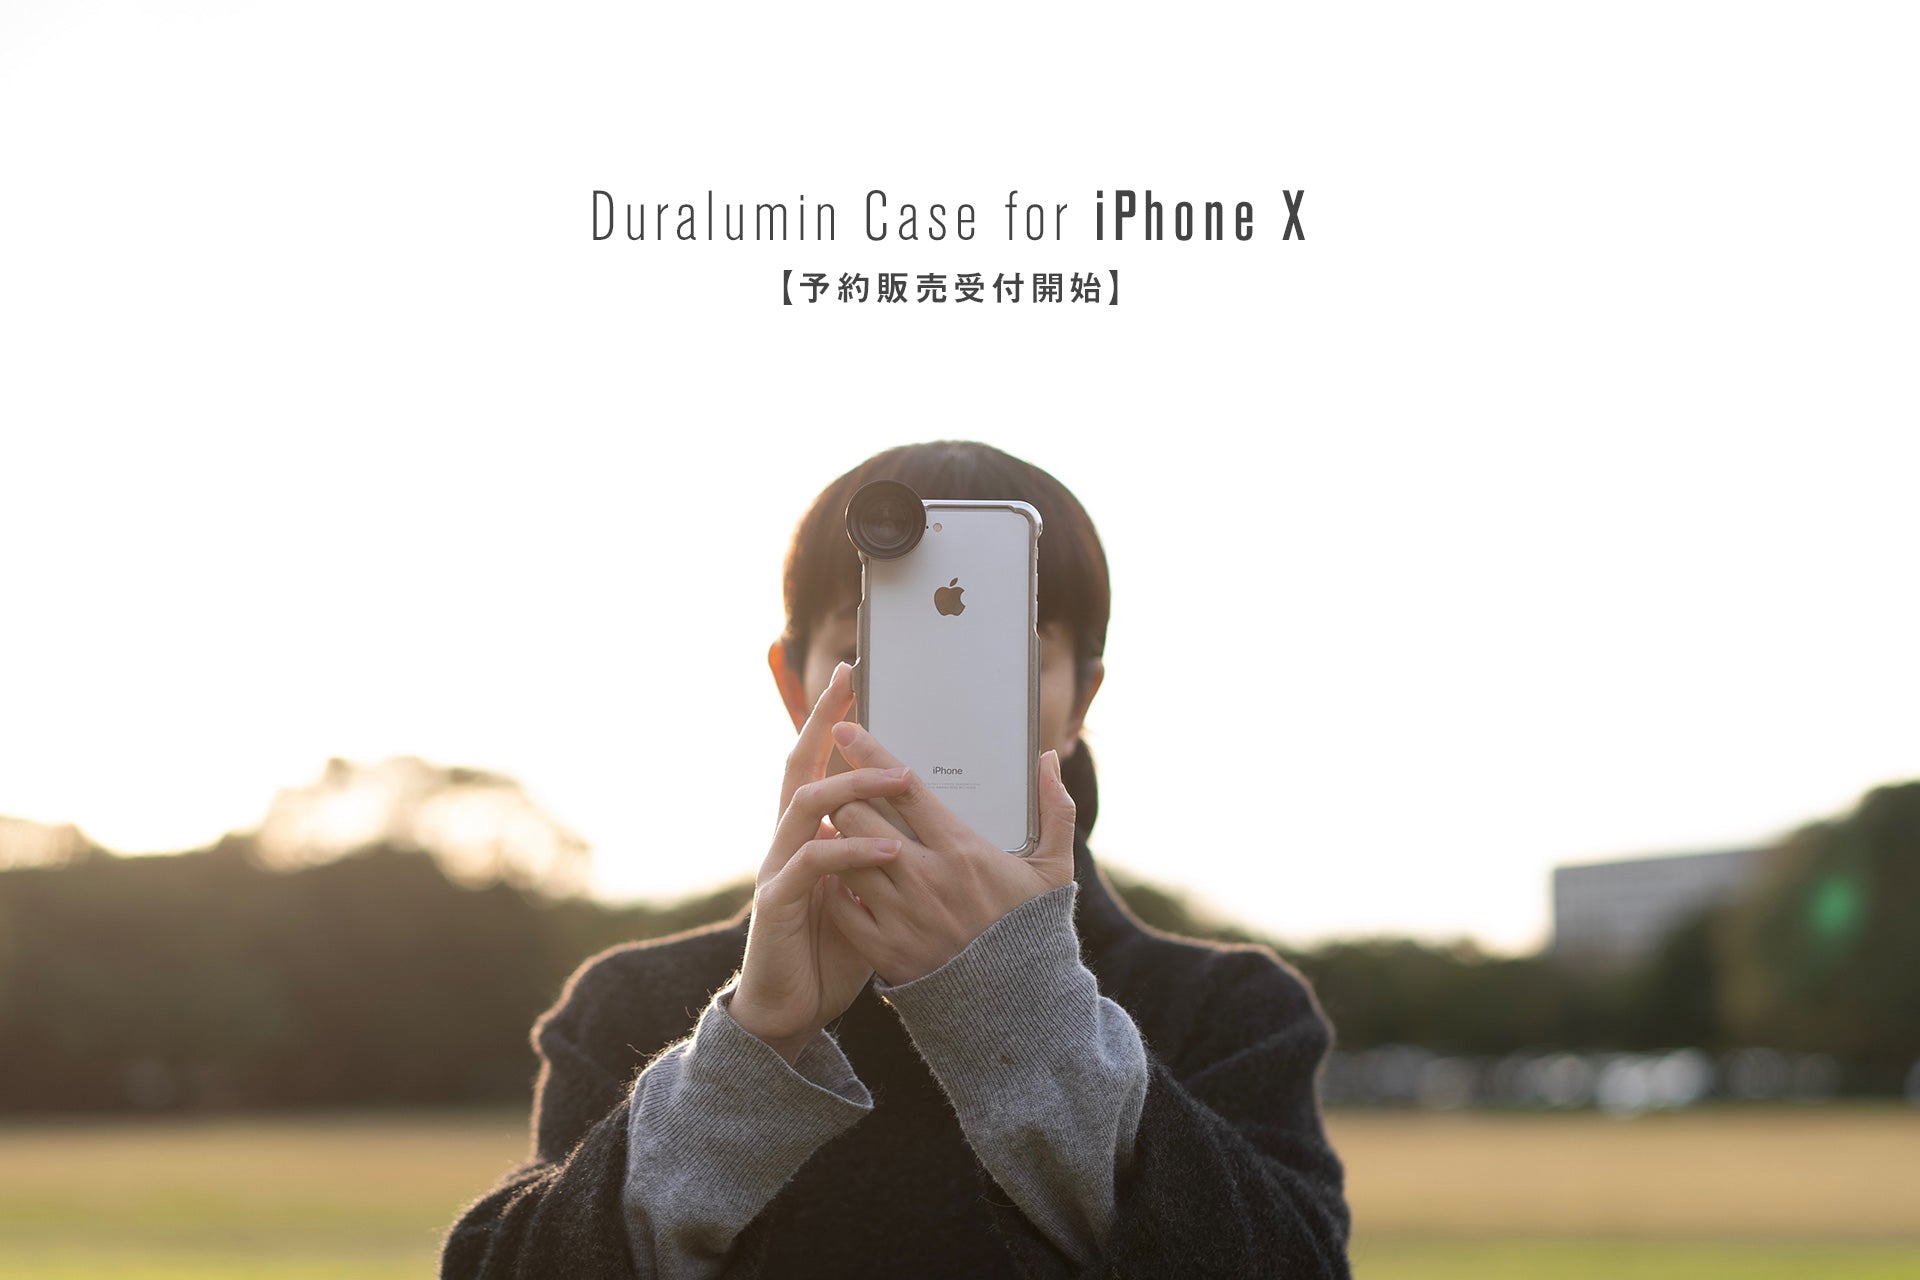 iPhoneX用 Duralumin Case 予約販売開始